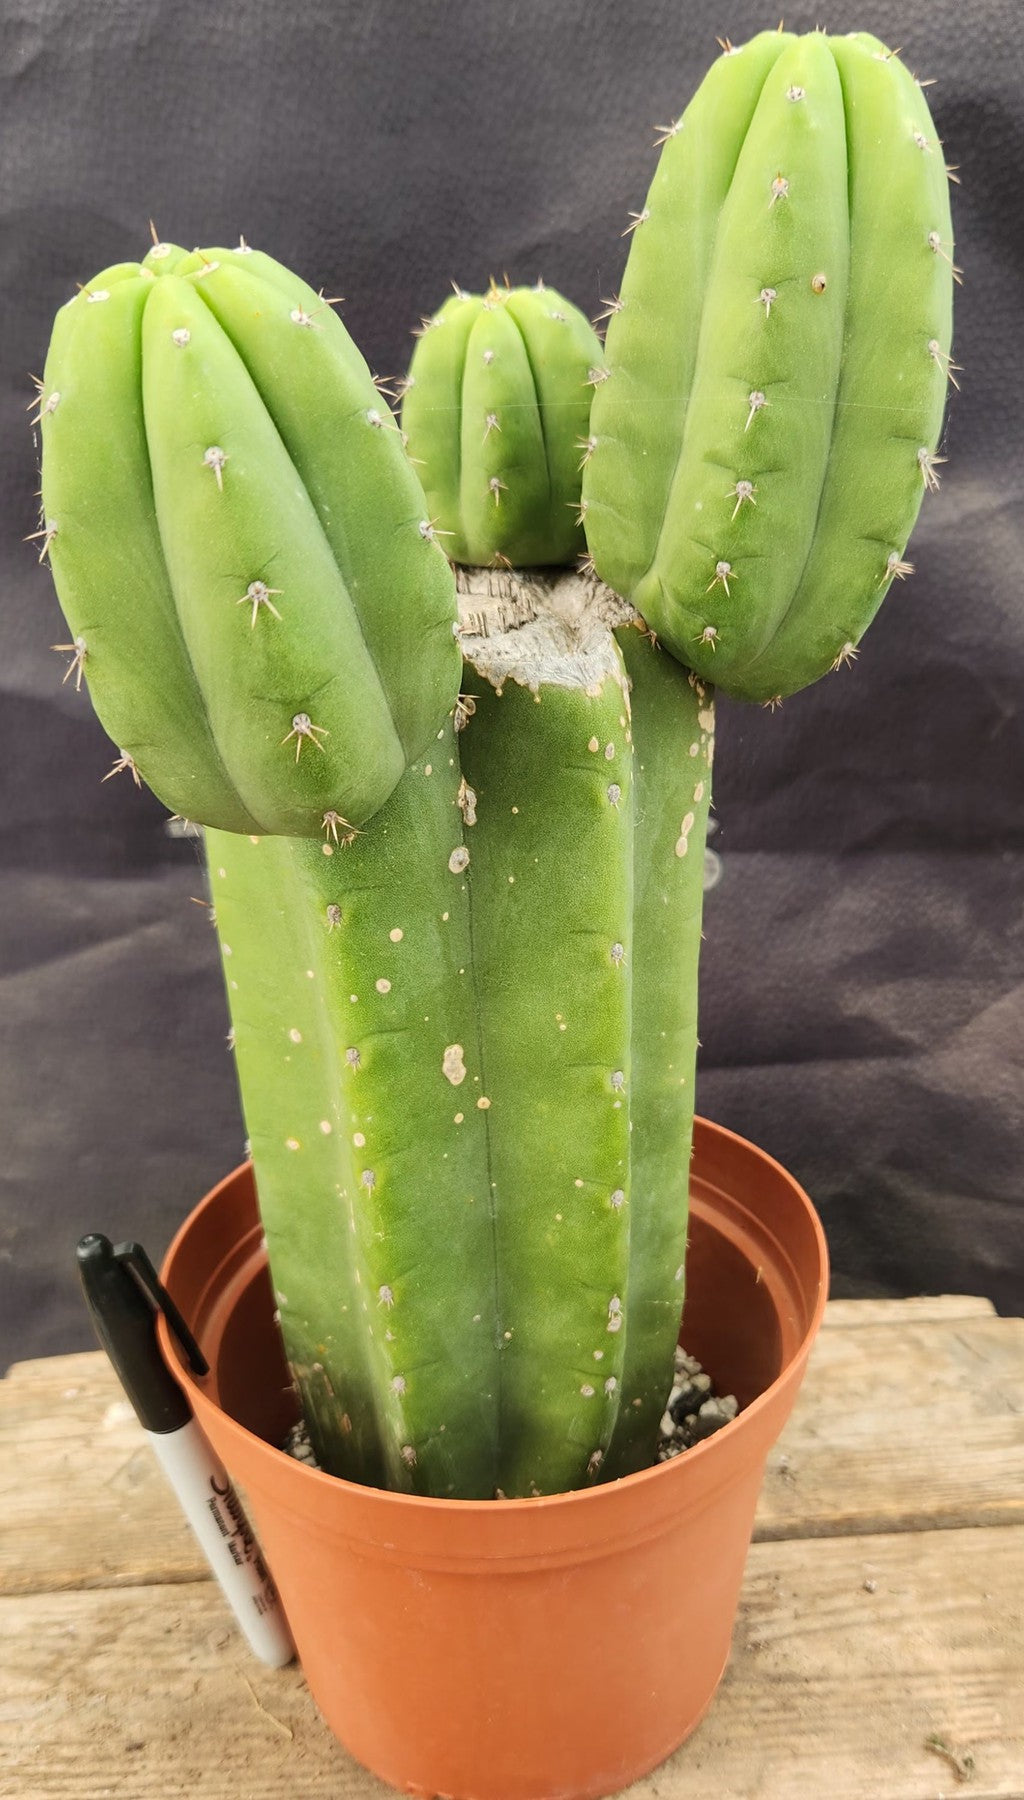 #EC346 EXACT Trichocereus TSS Pachanoi San Pedro Cactus 11.5”-Cactus - Large - Exact-The Succulent Source